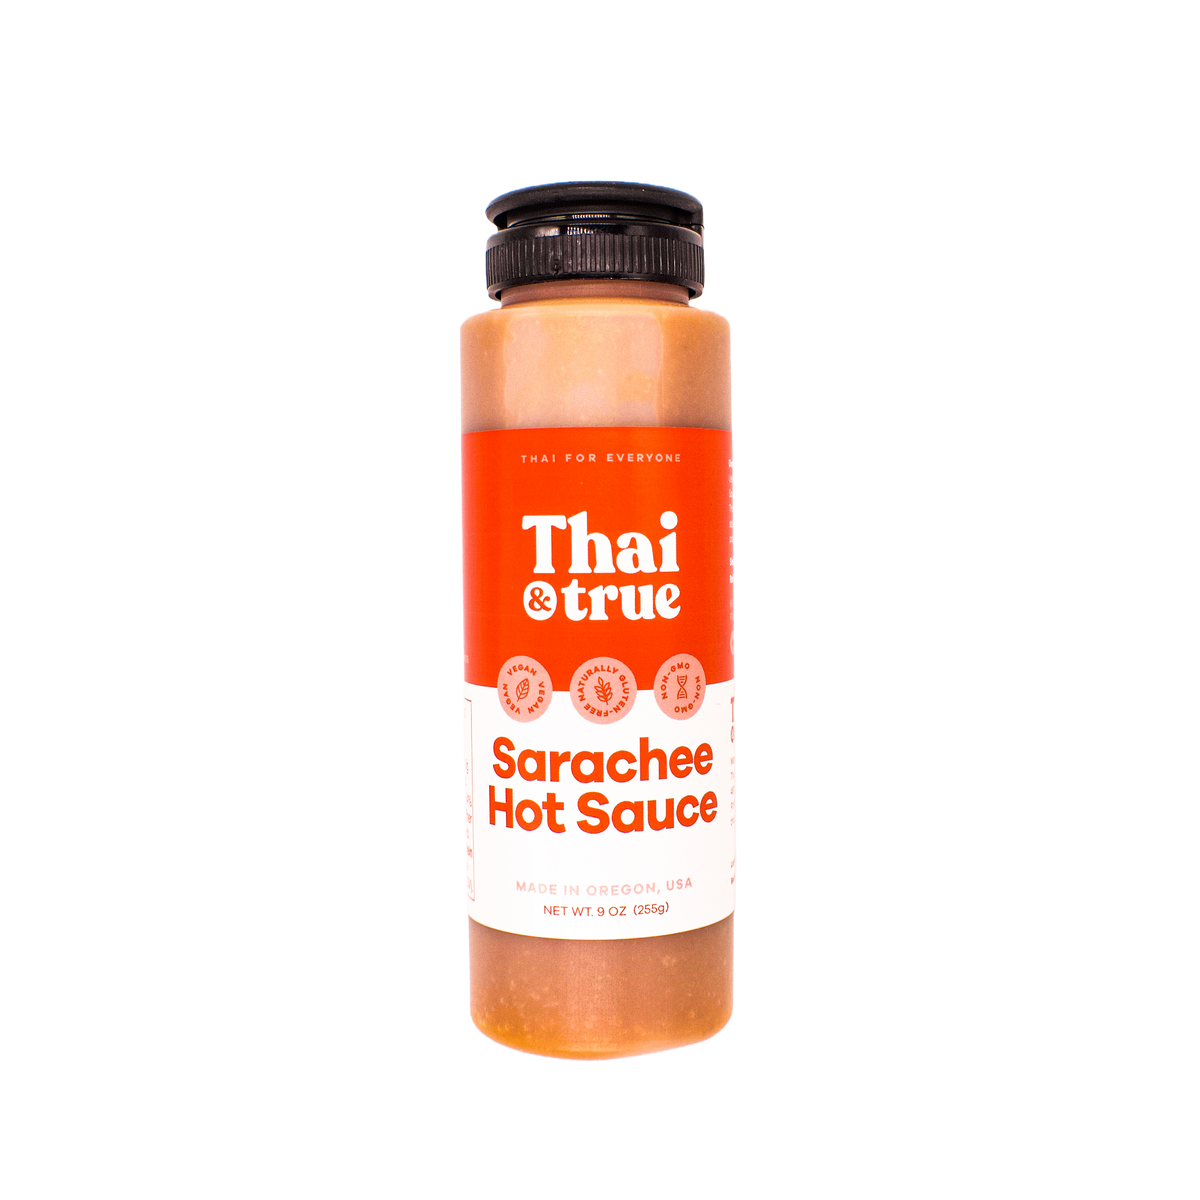 Thai And True Sarachee Hot Sauce